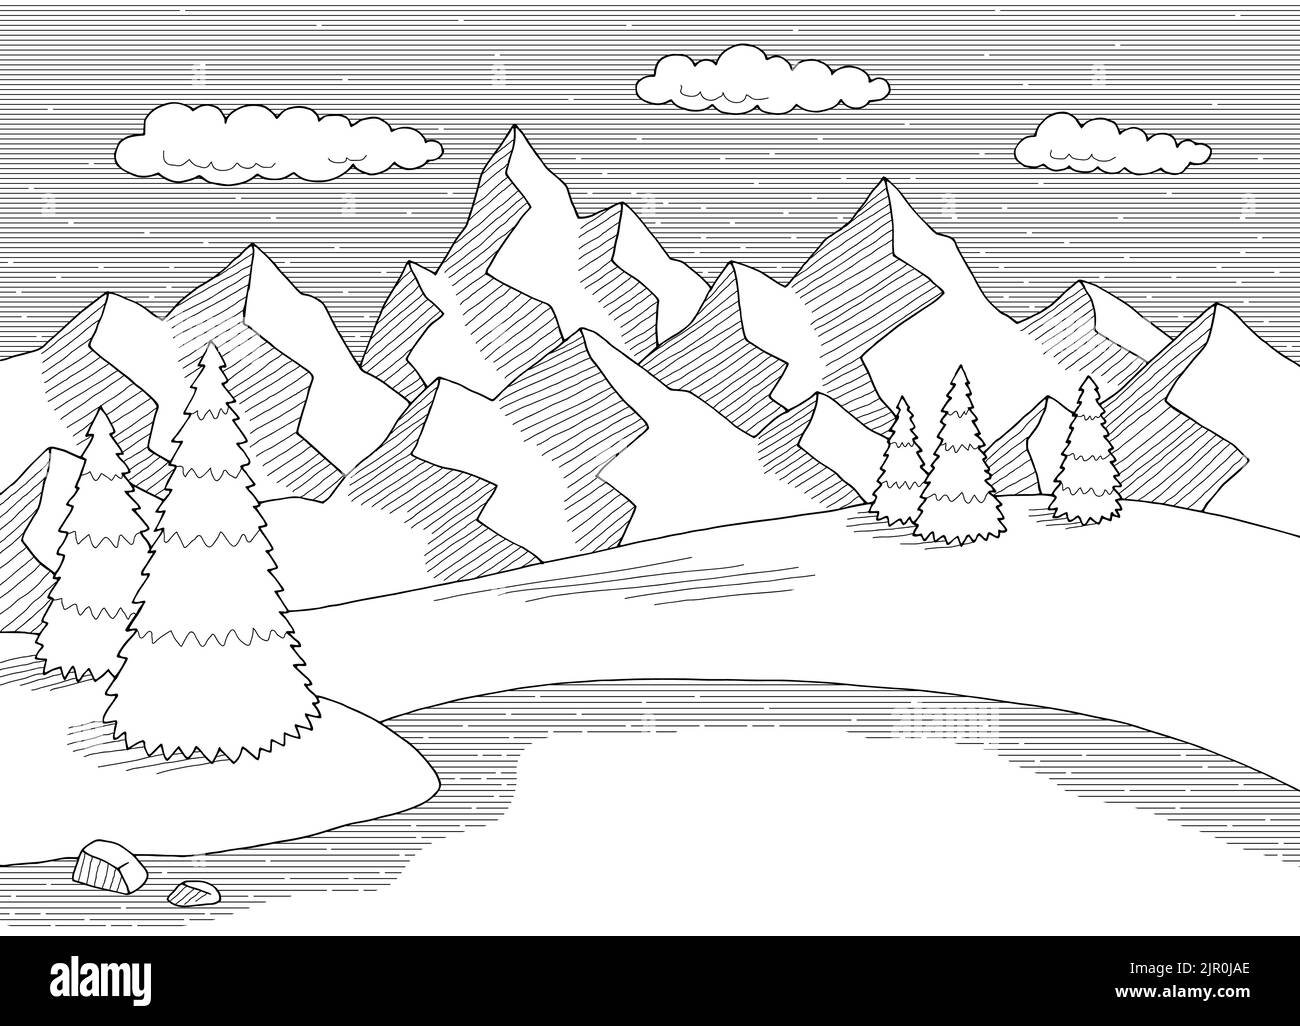 Berg See Grafik schwarz weiß Landschaft Skizze Illustration Vektor Stock Vektor